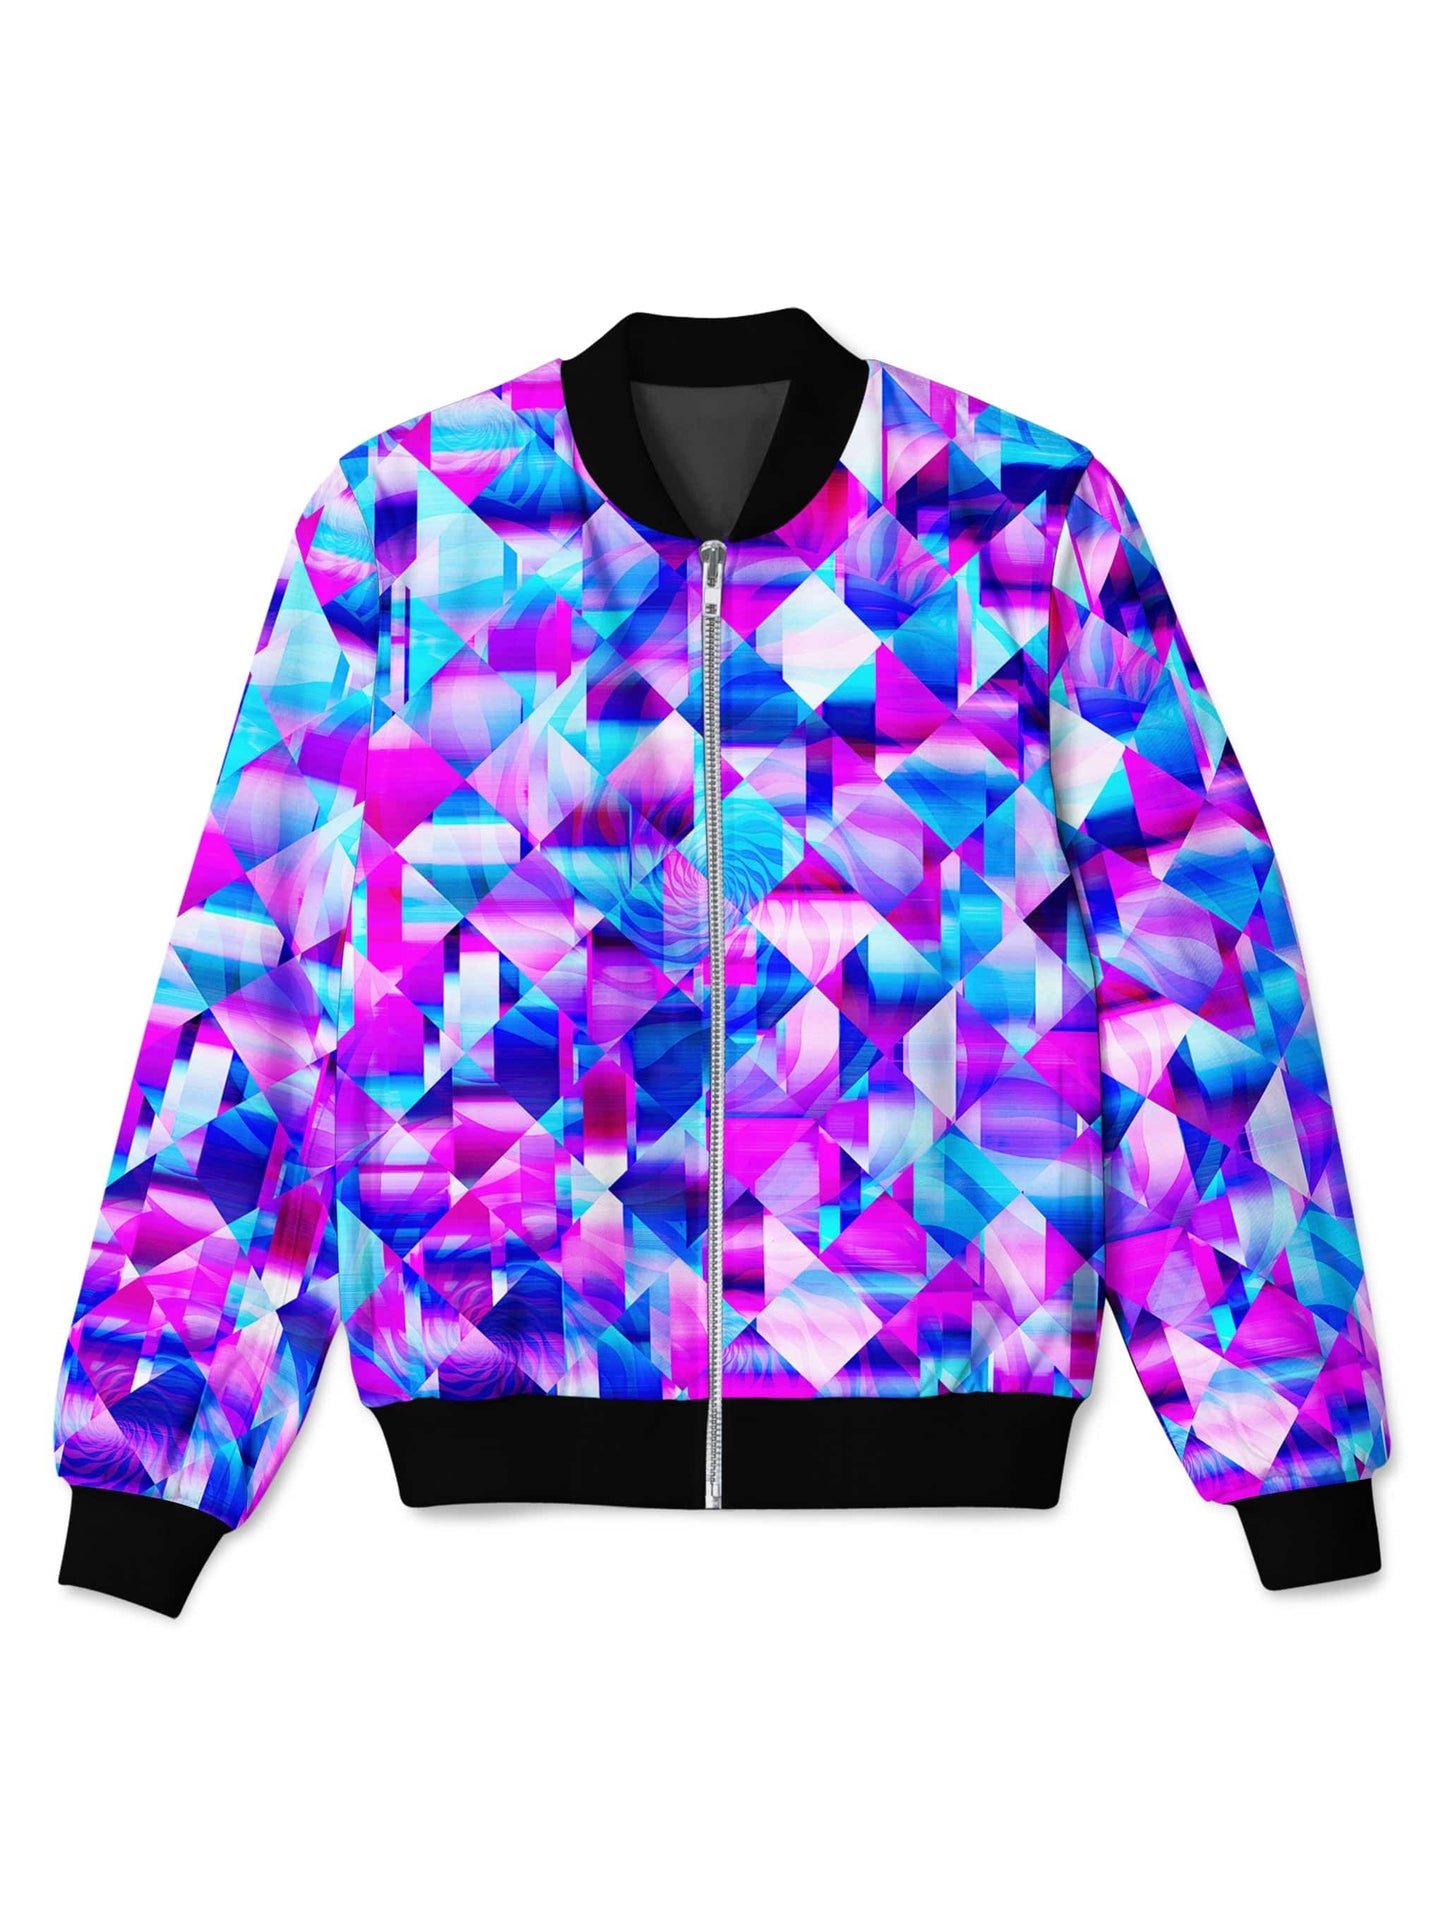 Blossom Trippy Bomber Jacket, Art Design Works, | iEDM